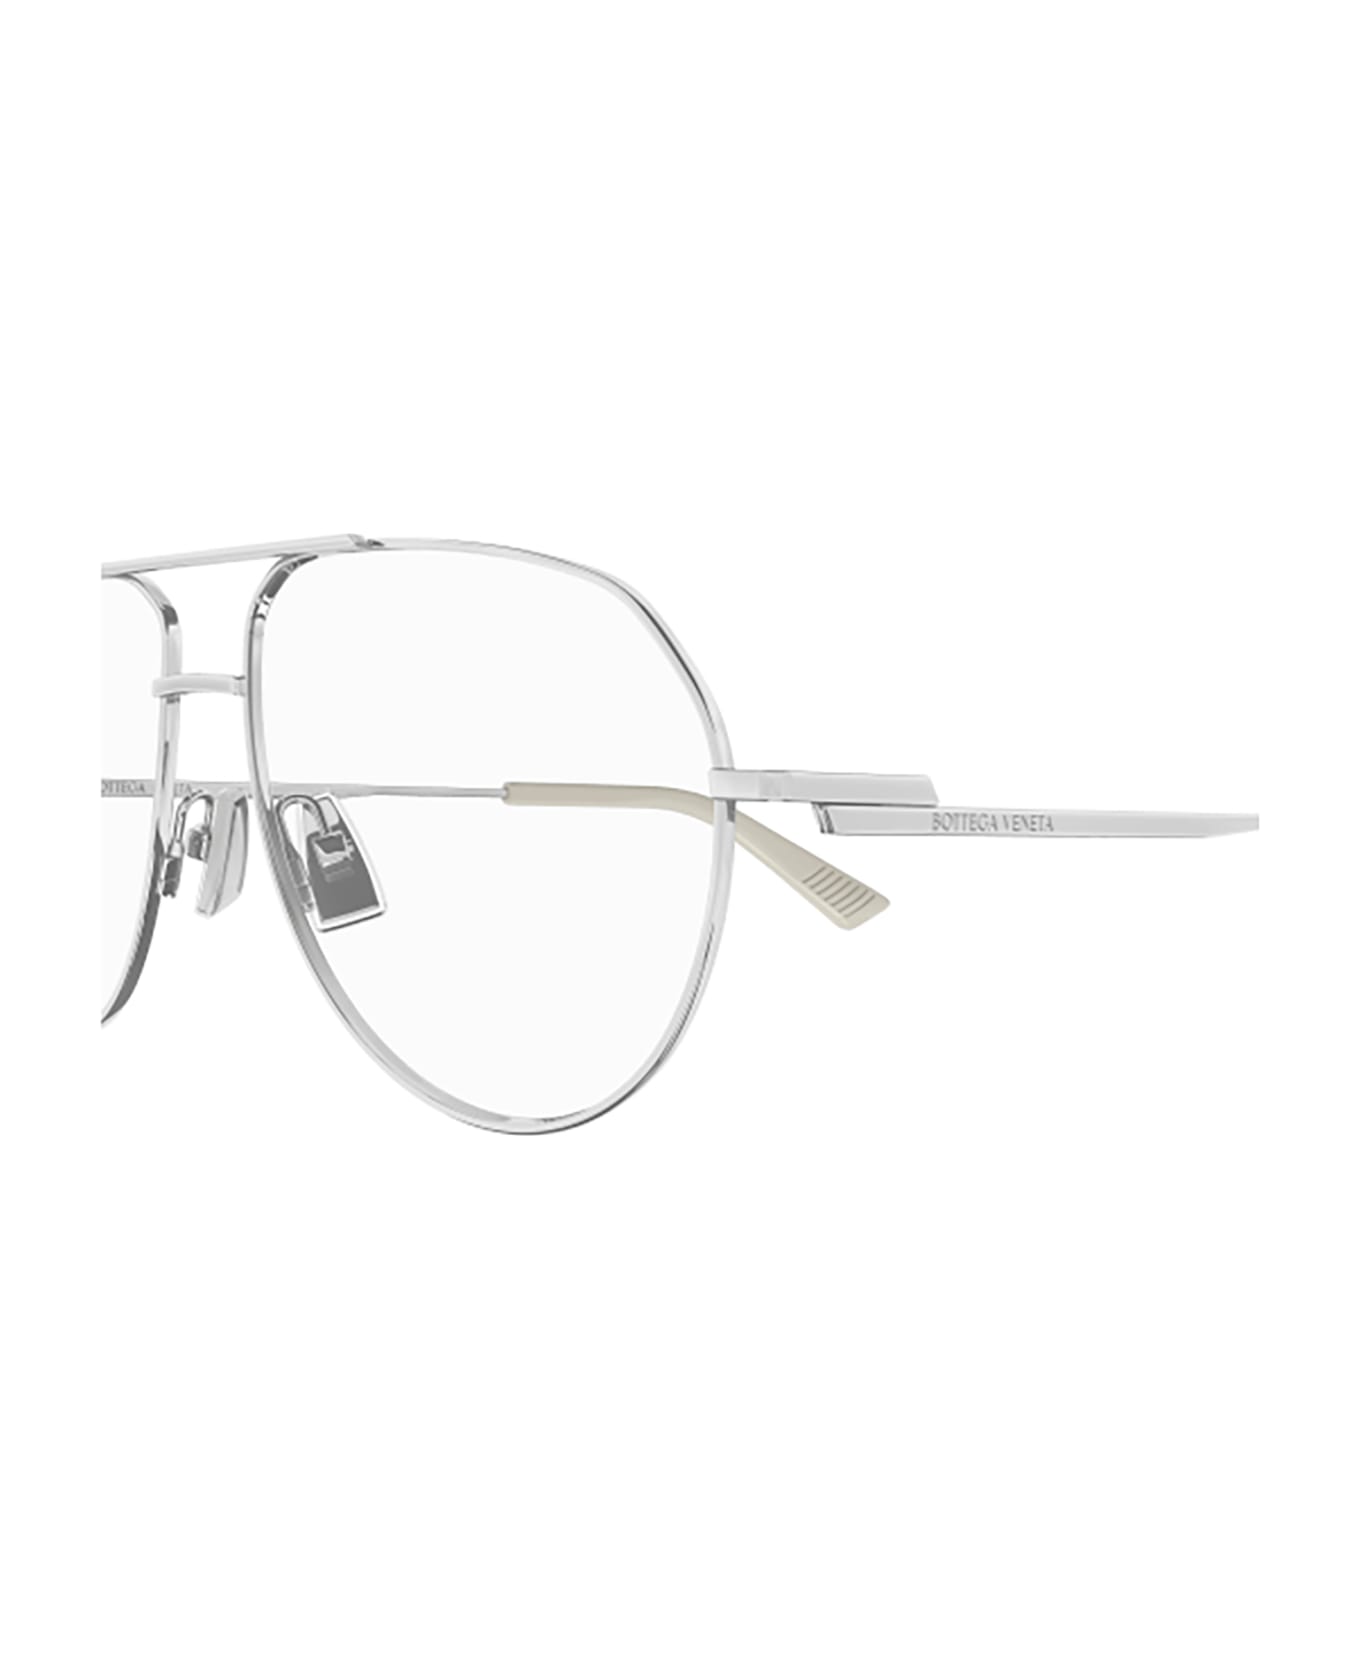 Bottega Veneta Eyewear Bv1302o Glasses - 002 silver silver transpa